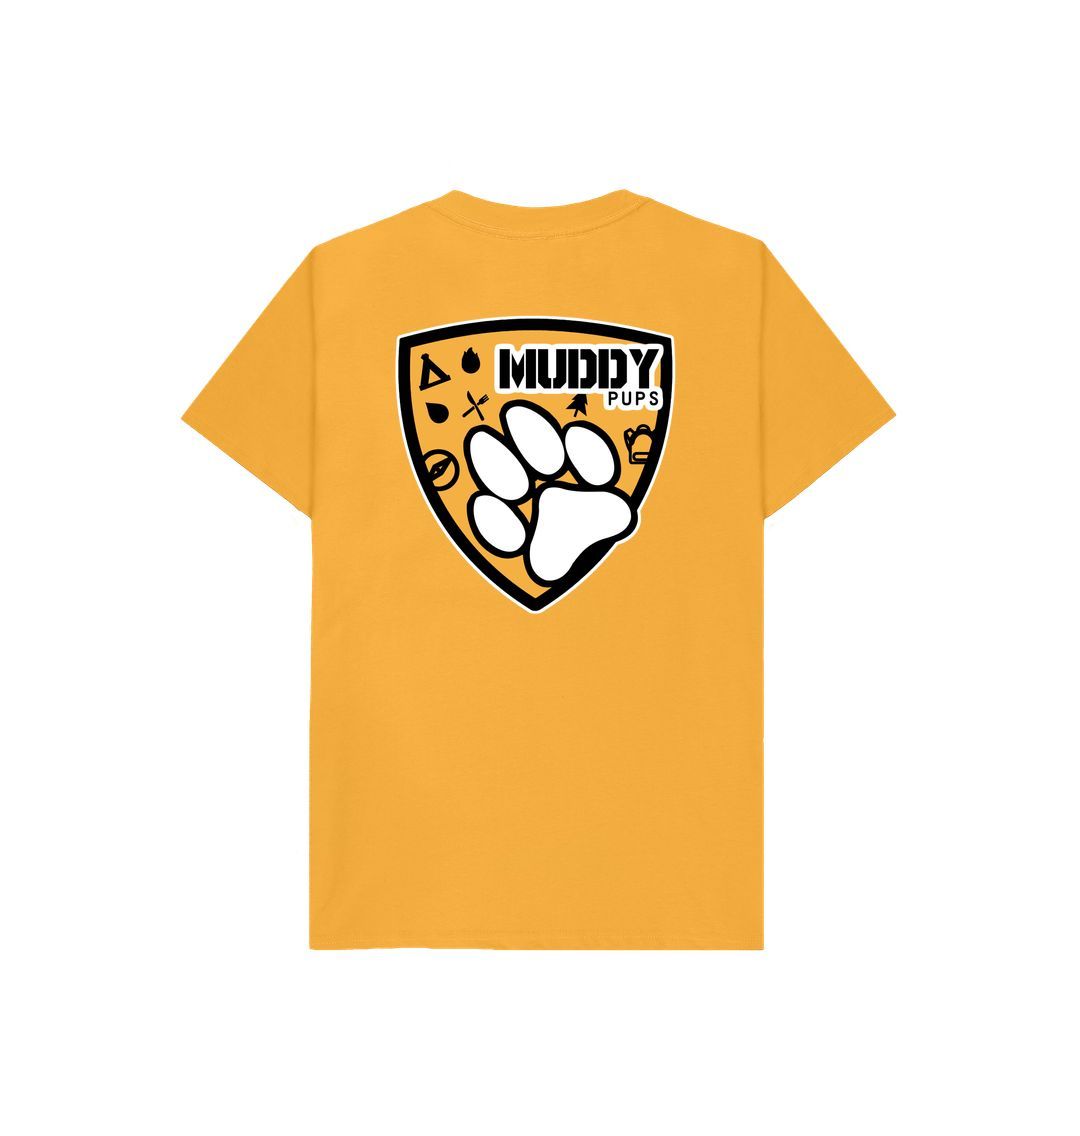 UKSN Muddy Pups / MUD Dogs Official Charter Childs T-Shirt